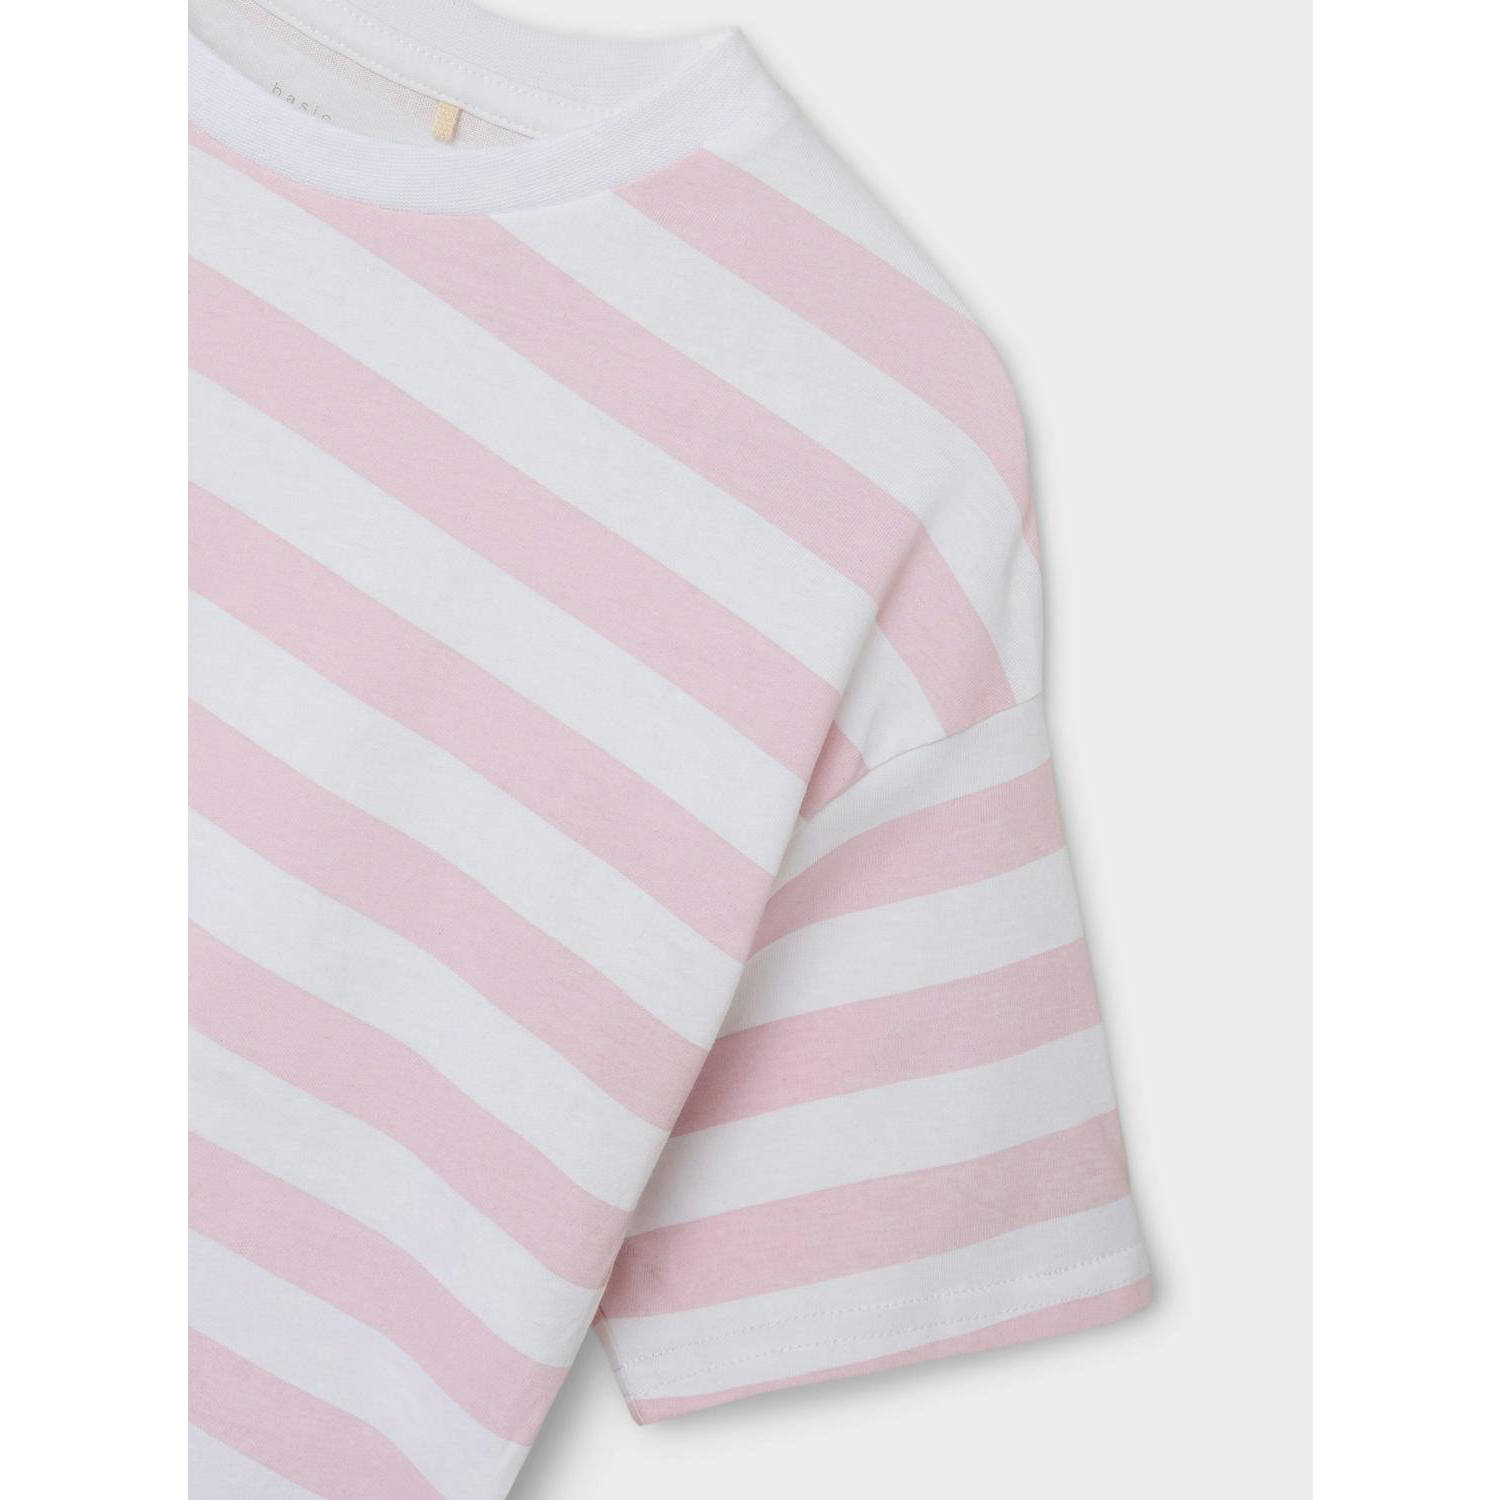 NAME IT KIDS gestreept T-shirt NKFVITANNI roze wit